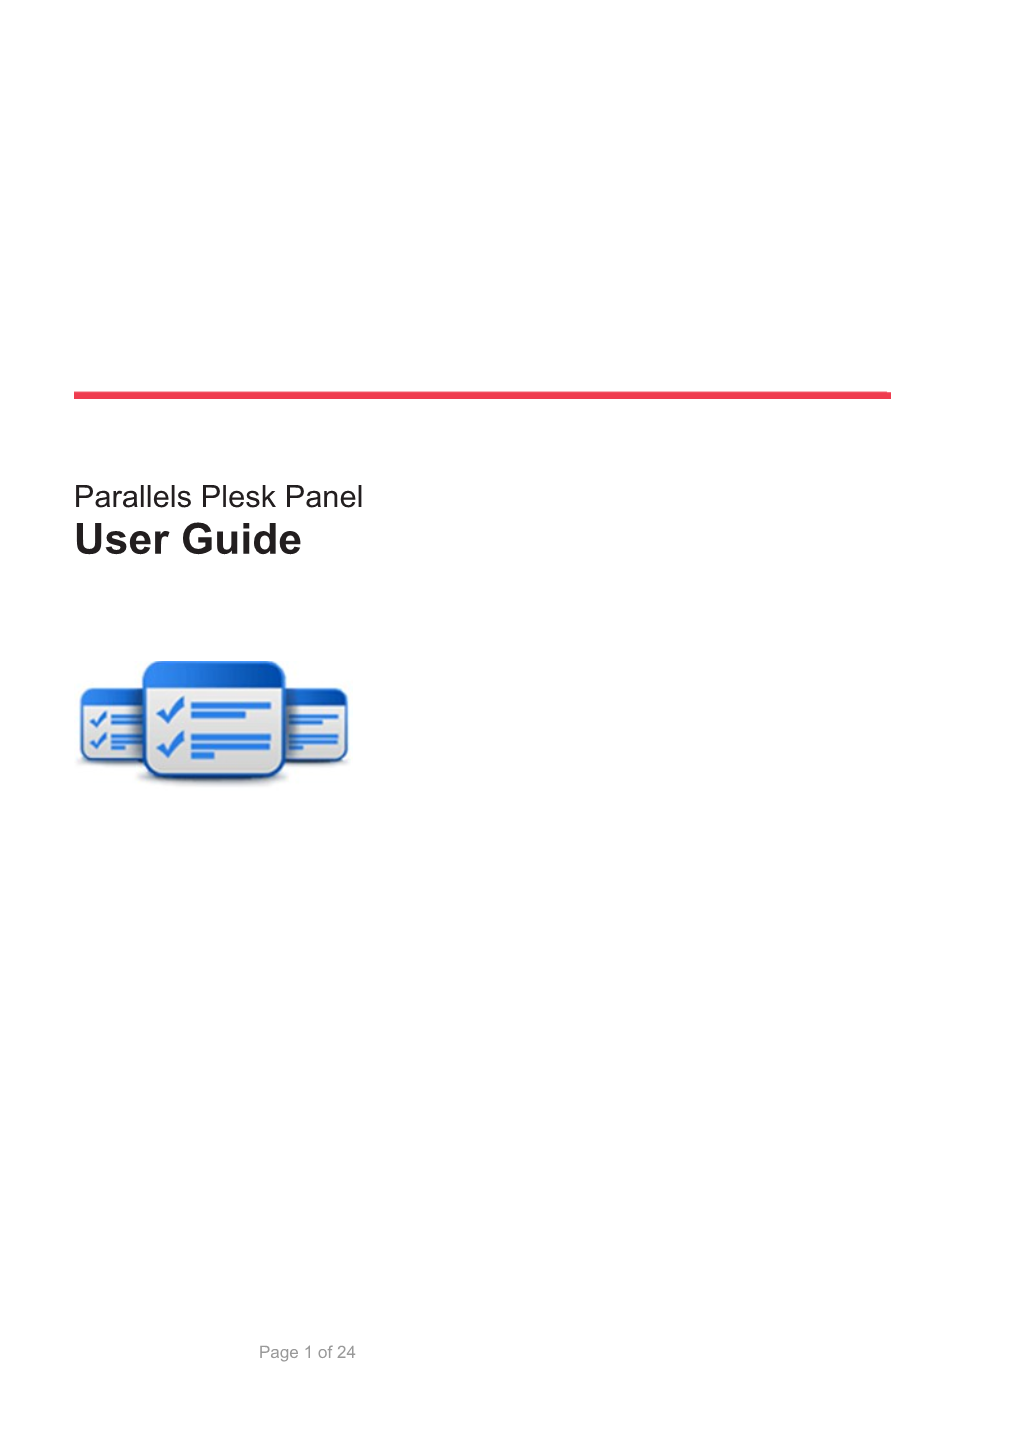 Parallels Plesk Panel User Guide